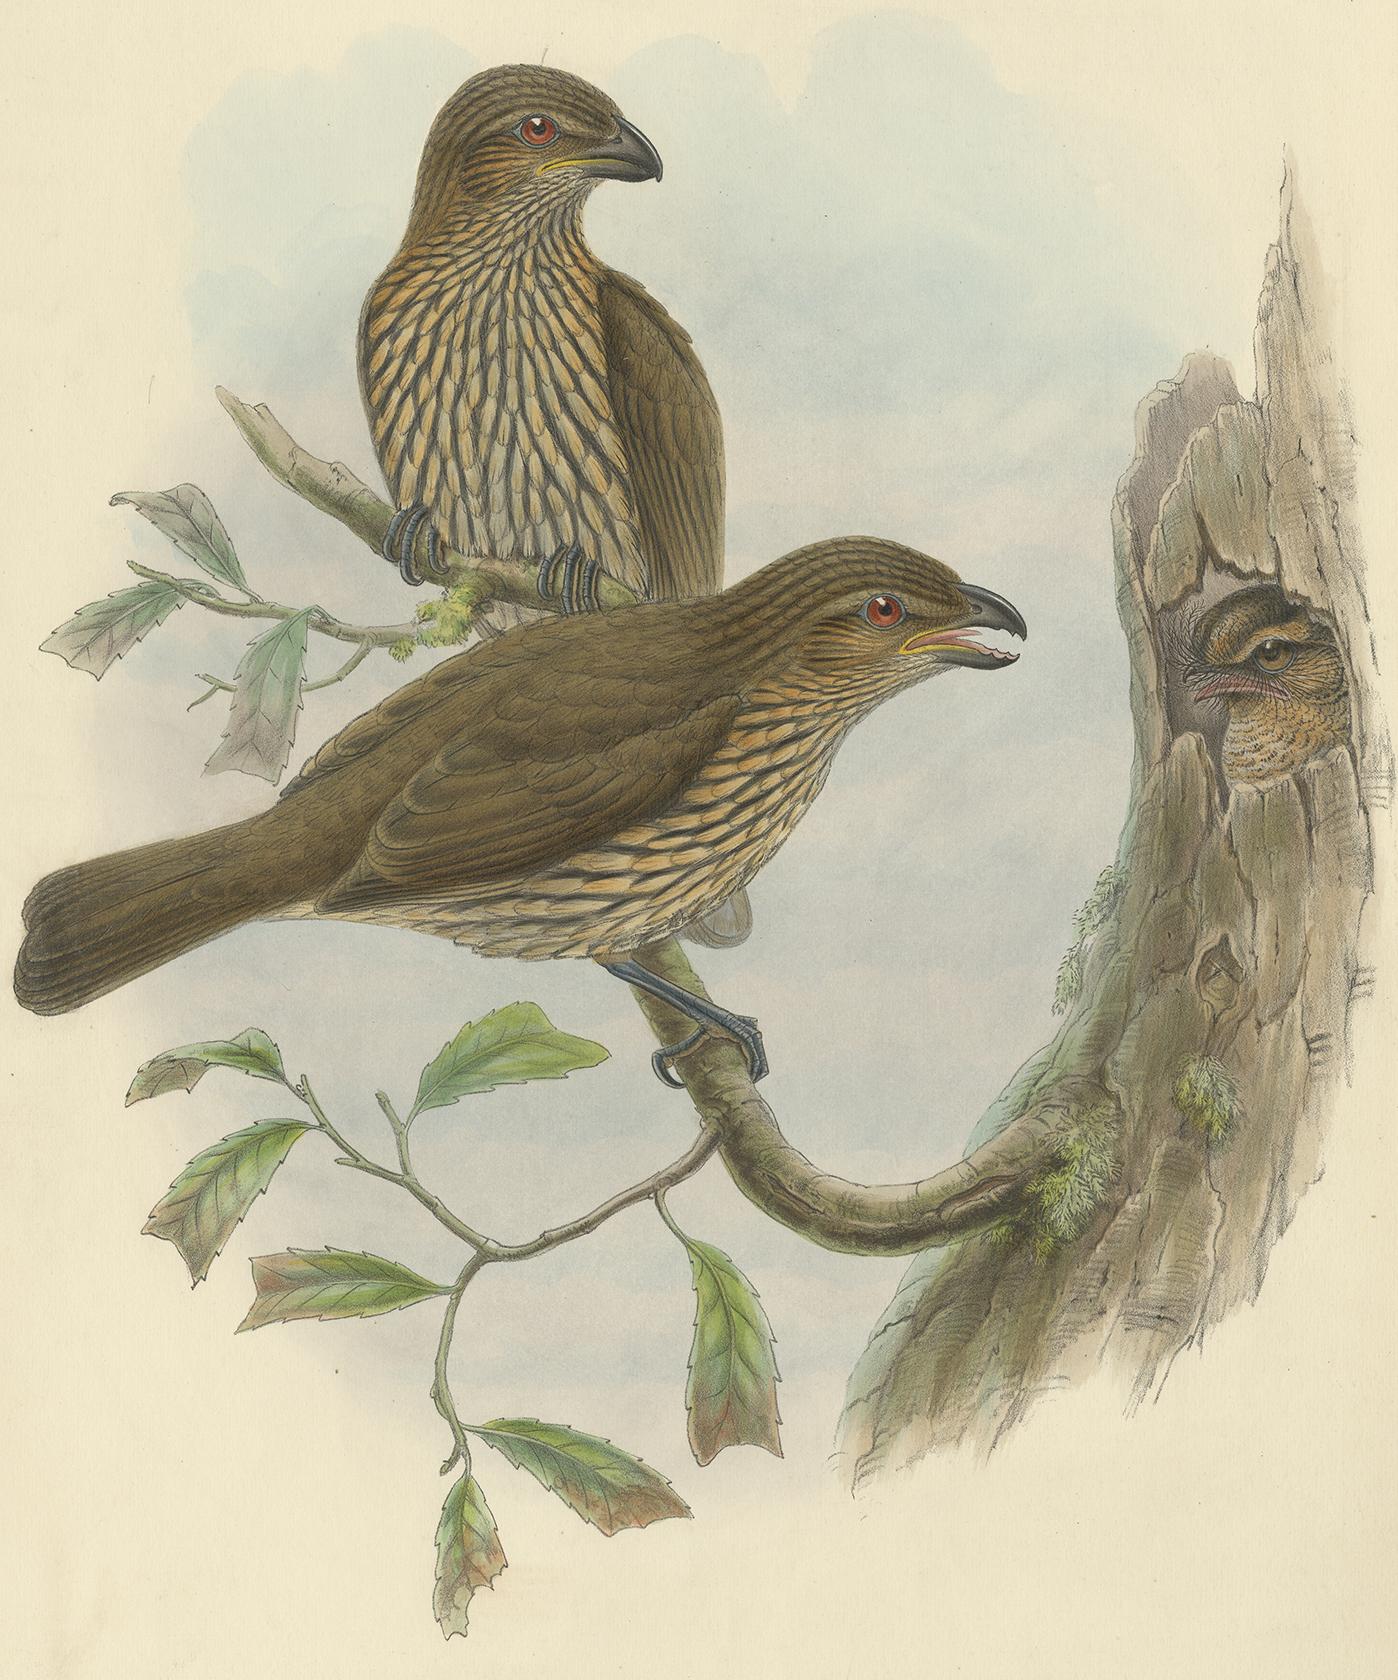 Antique print titled 'Tectonornis Dentirostris, (Ramsay)'. This print originates from J. Gould's Birds of New Guinea.